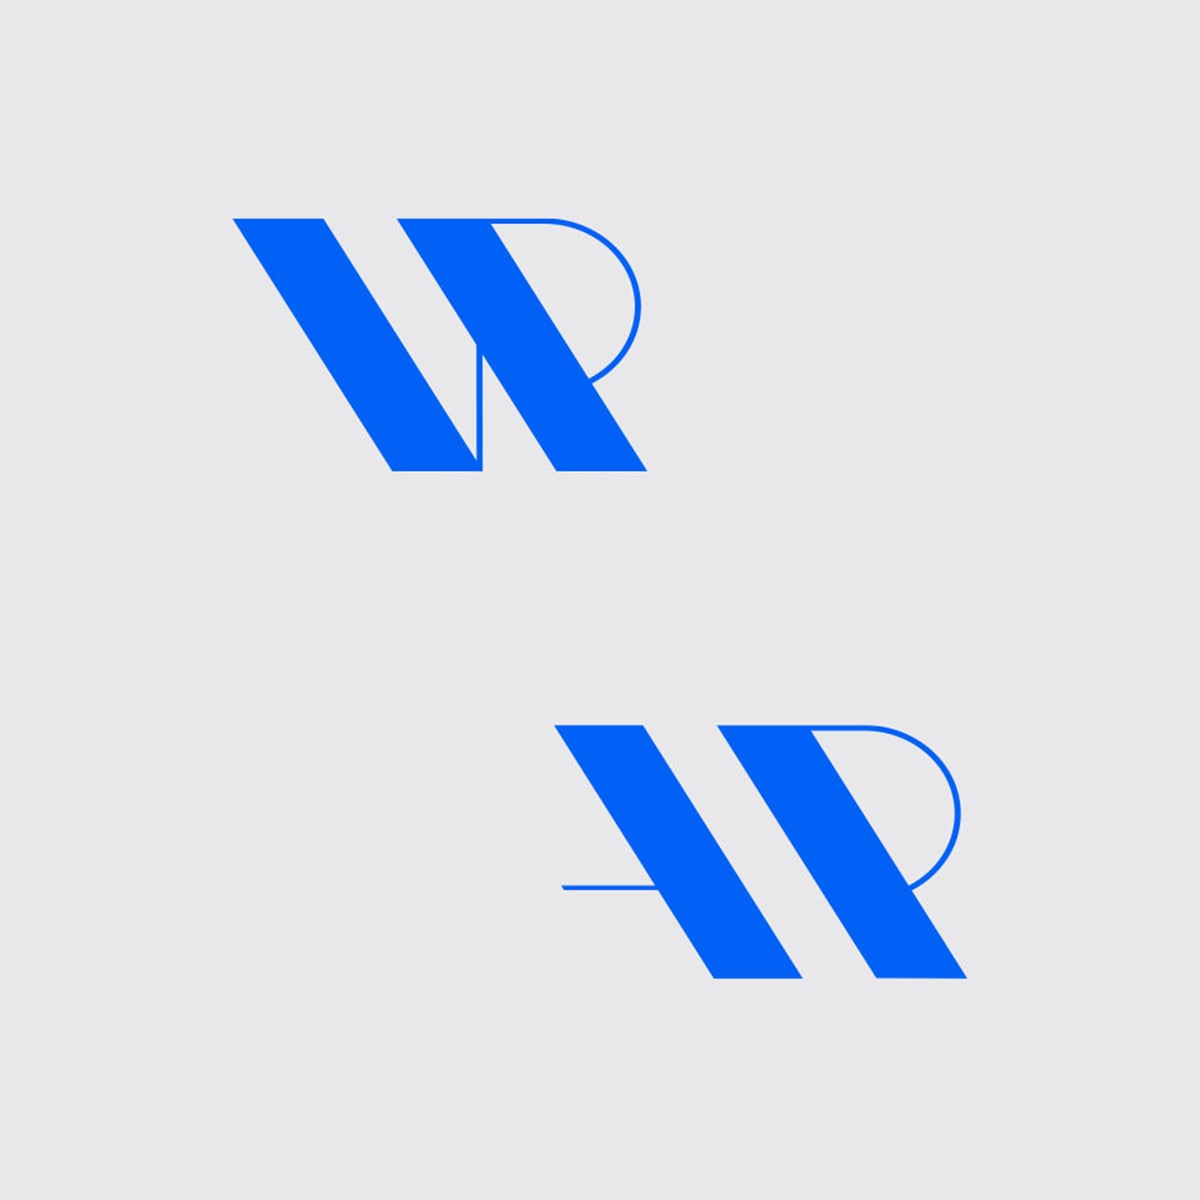 Create VR + AR bespoke type logos. Designed by Superfried.